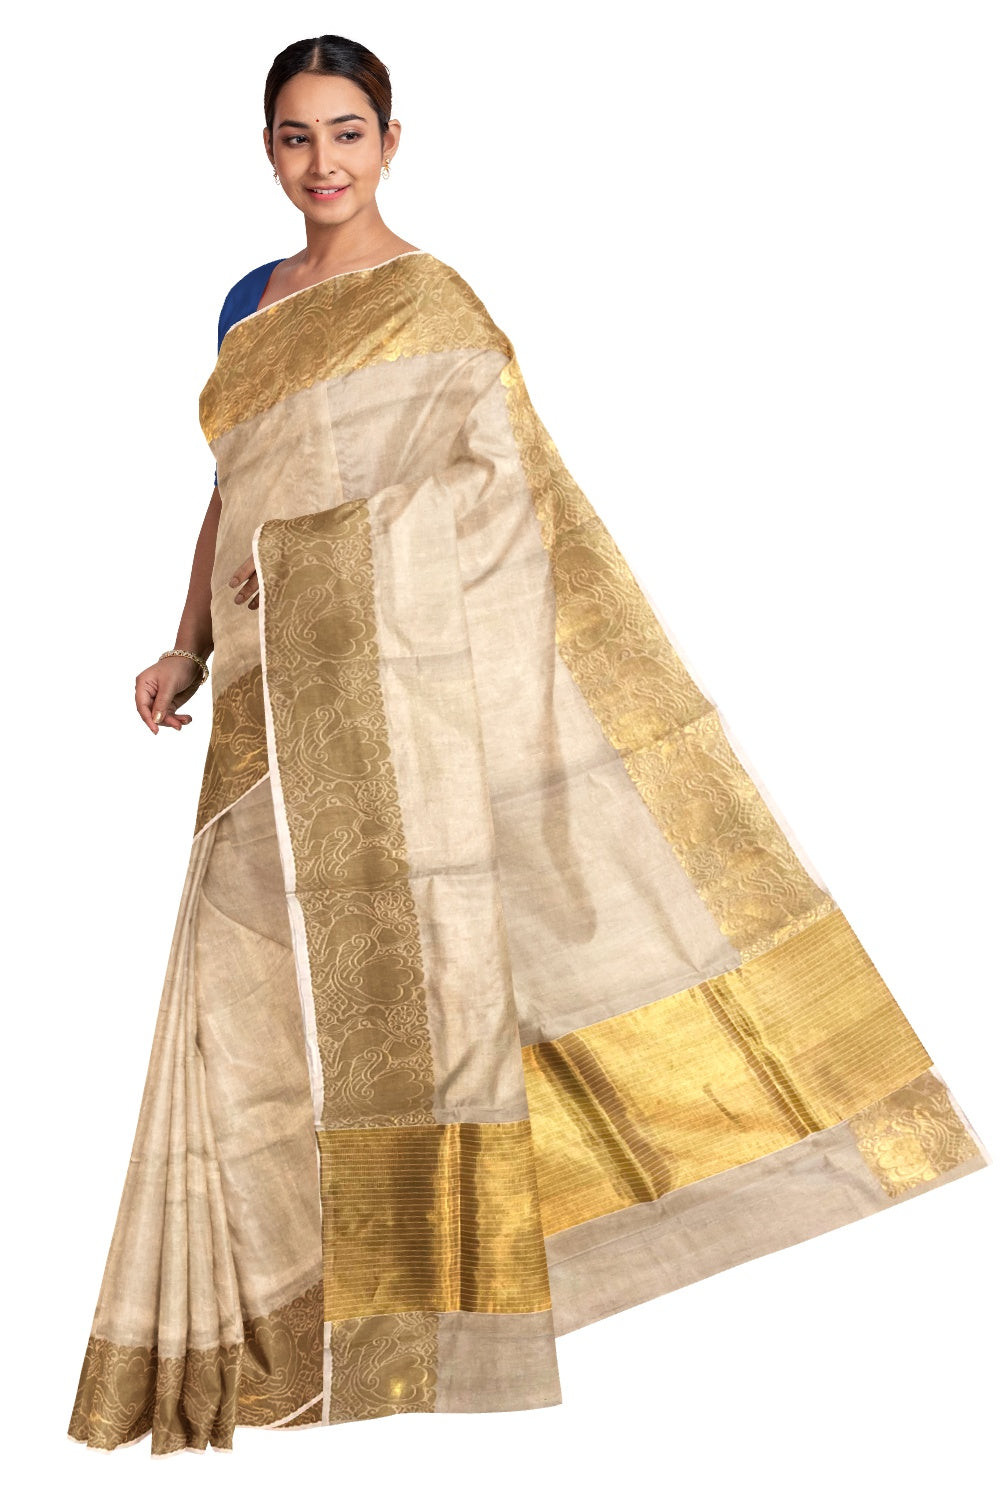 Southloom Balaramapuram Handloom Premium Tissue Saree with 10 inch Lines Pallu